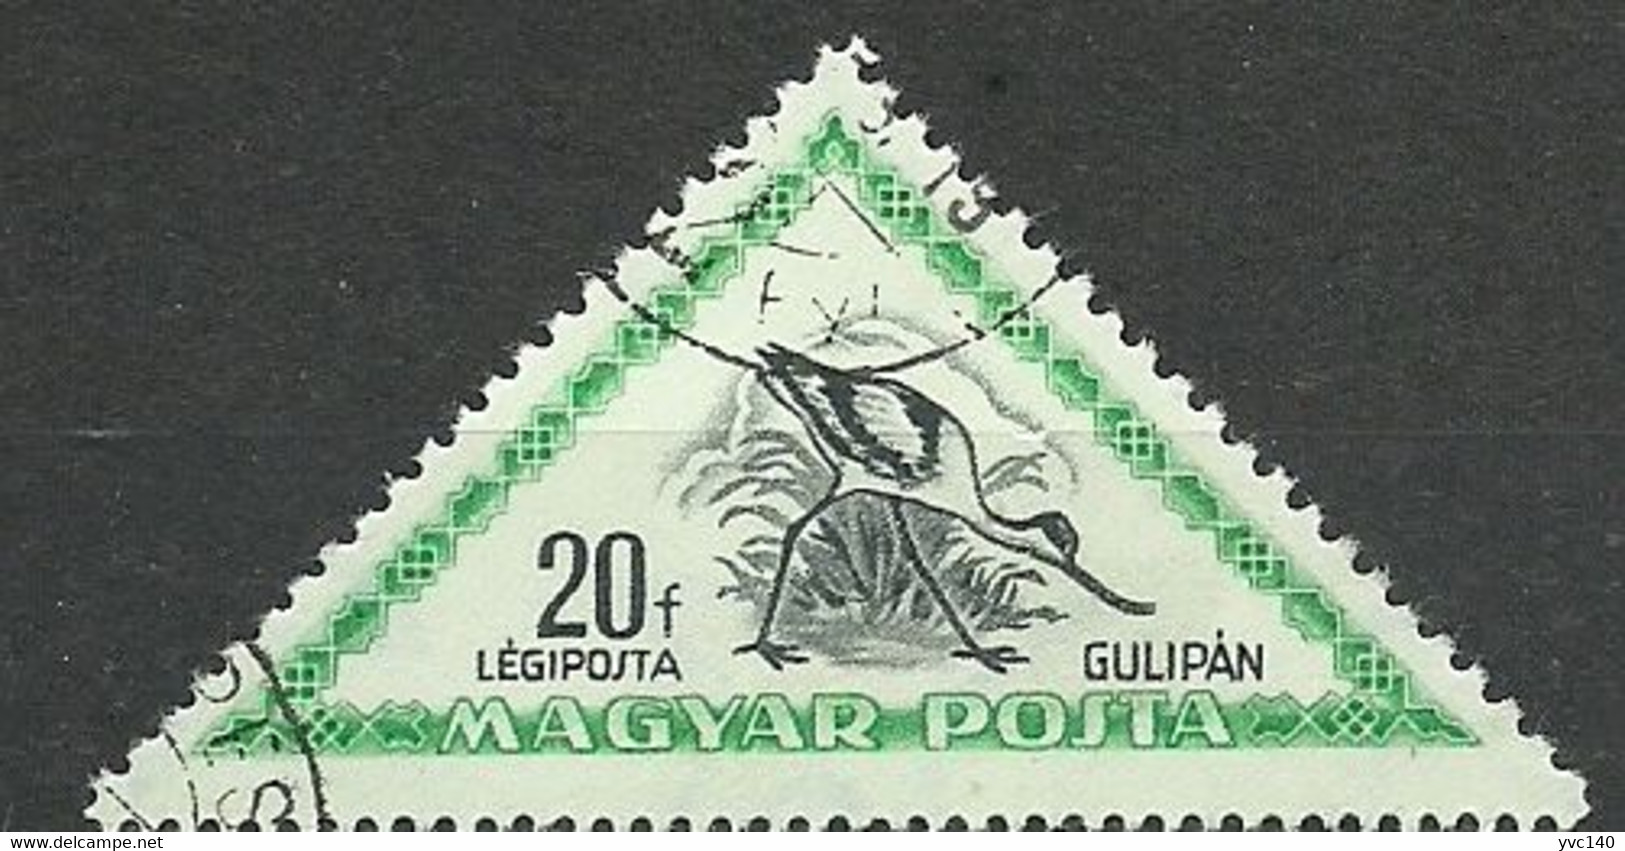 Hungary; 1962 Birds "Pied Avocet" - Swallows